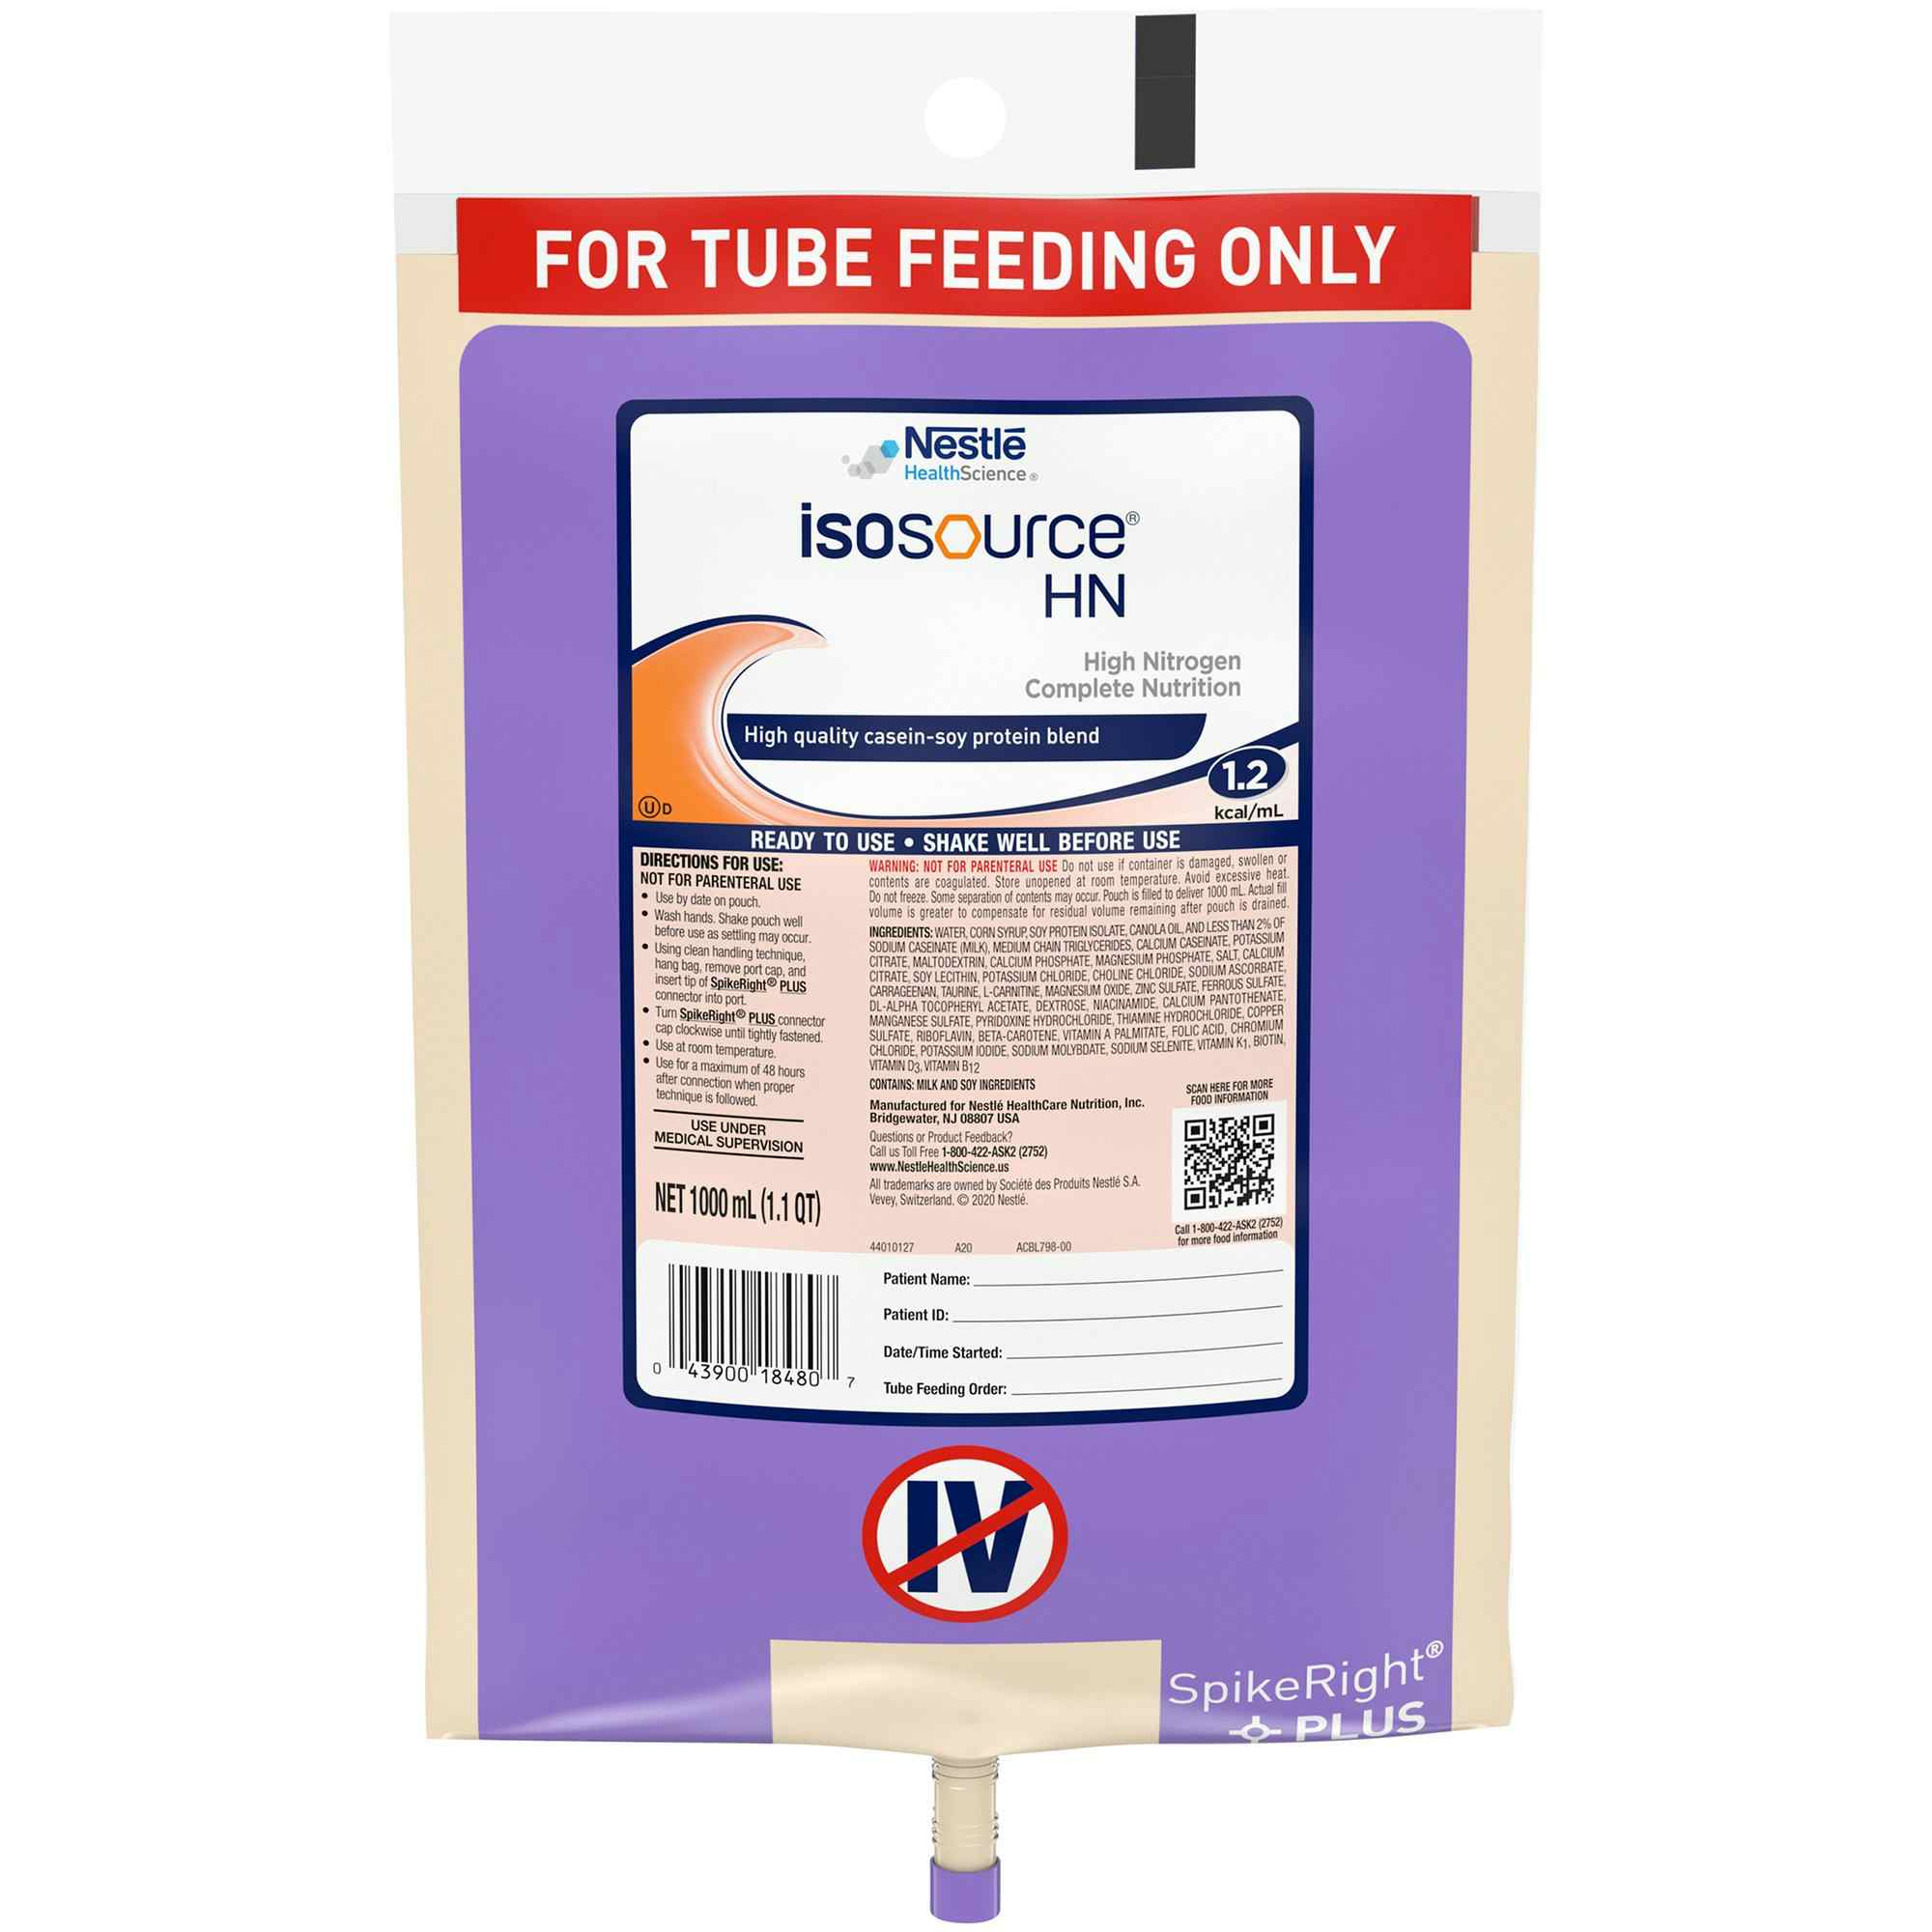 Nestle HealthScience Isosource HN High-Nitrogen Complete Nutrition Tube Feeding Formula, 10043900184804, 33.8 oz. - 1 Each